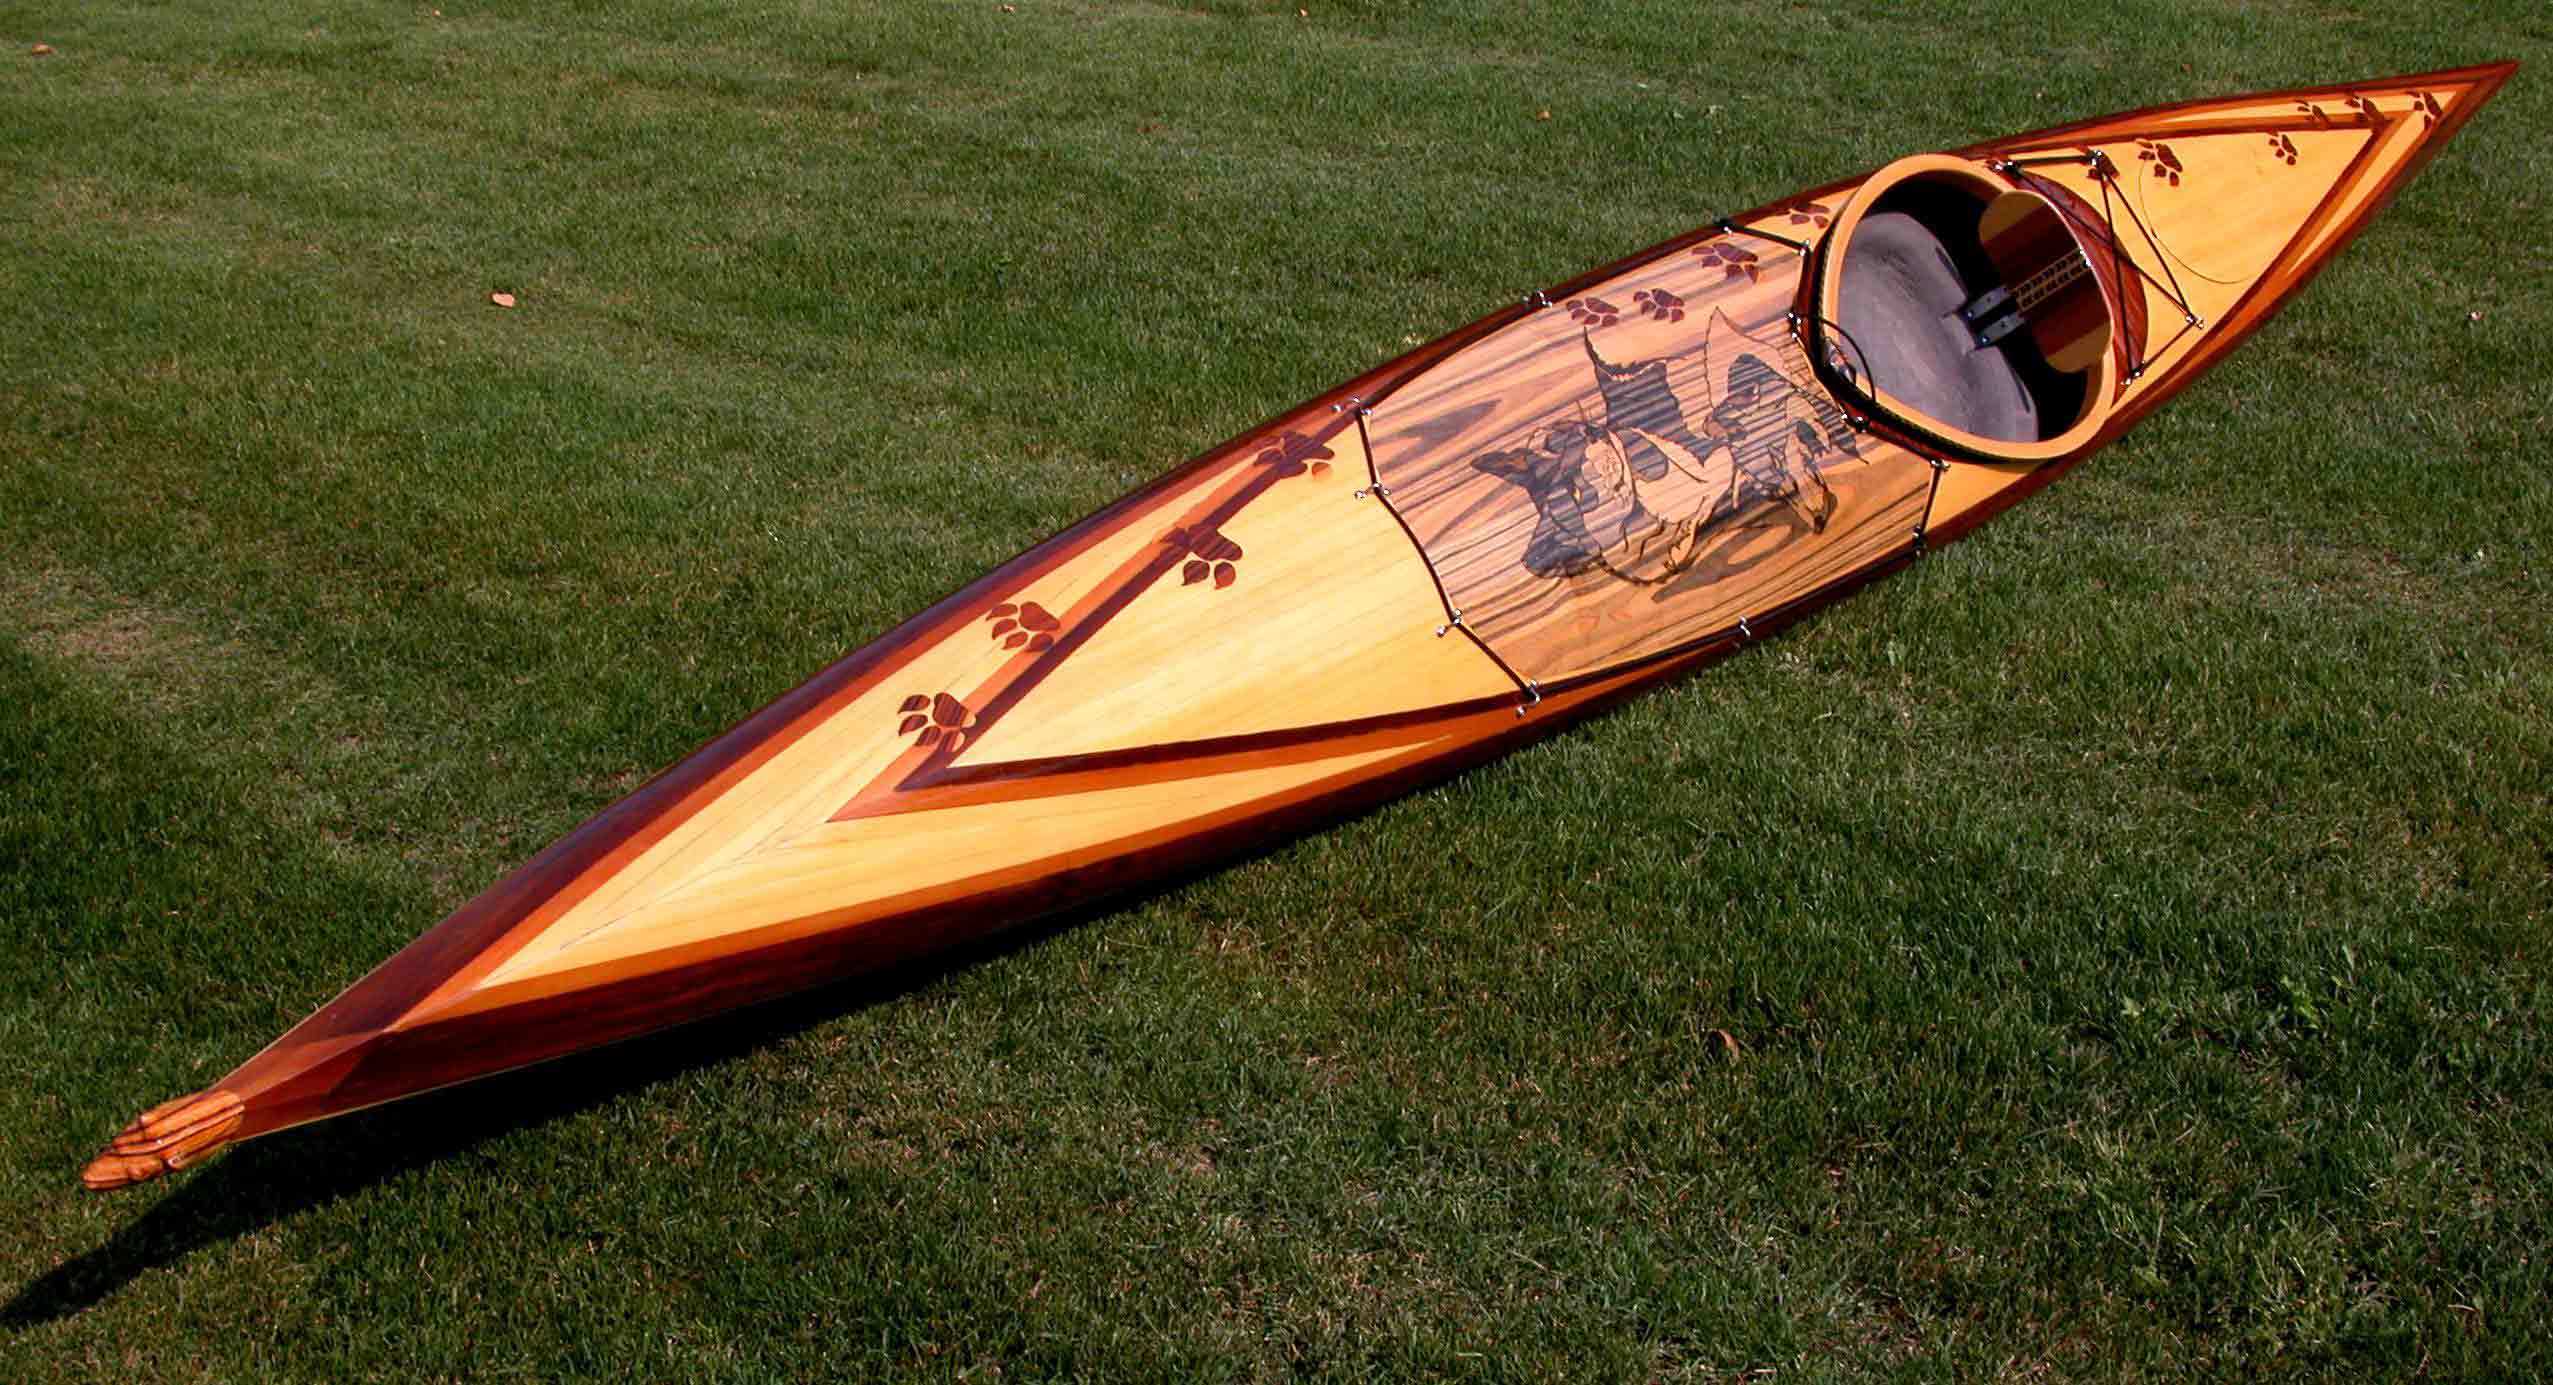 Wood Strip Kayak Deck Design | Motorcycle Review and Galleries